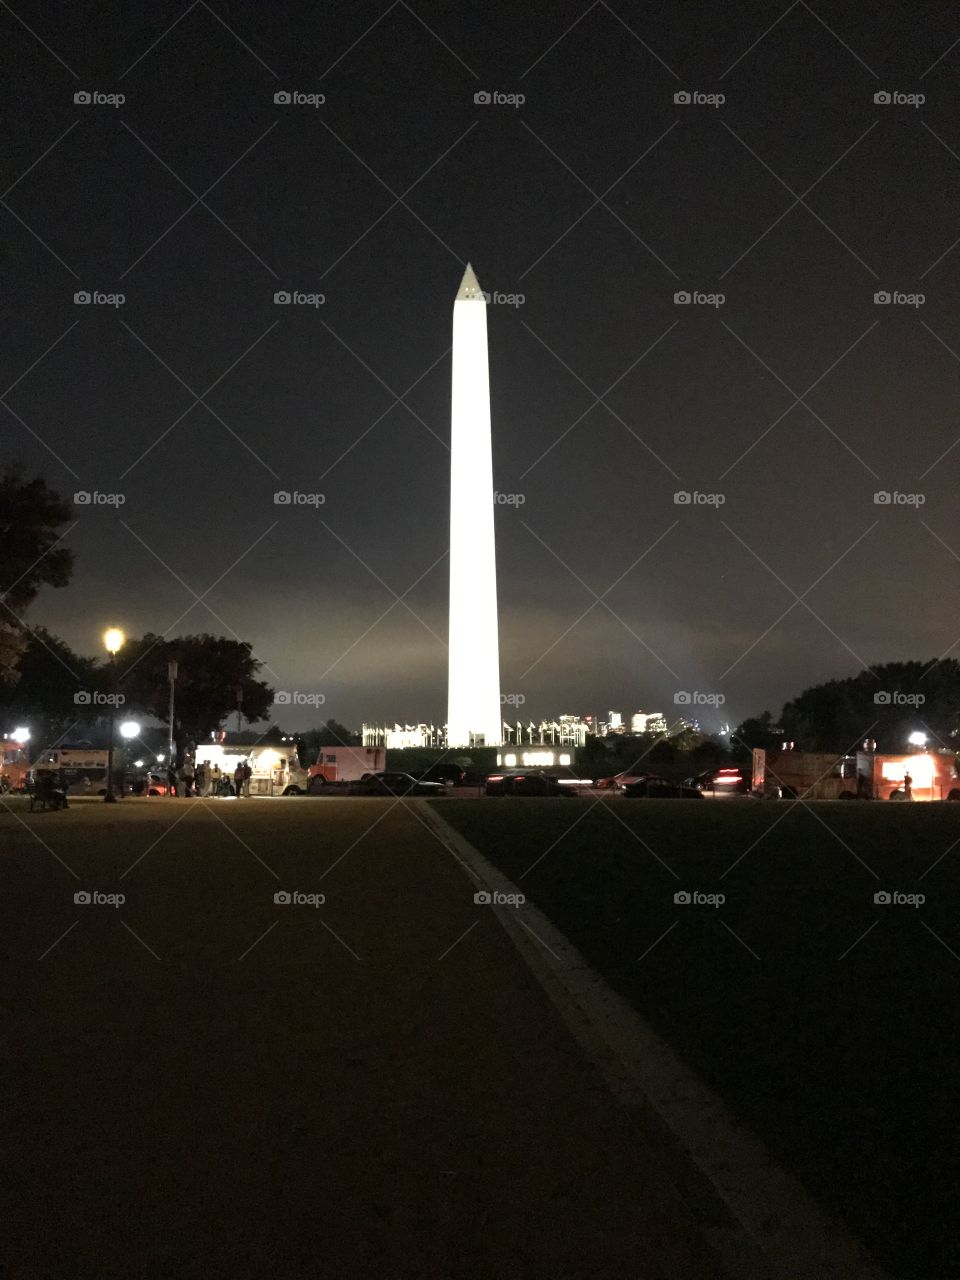 Washington Memorial at night with food trucks, Washington, DC